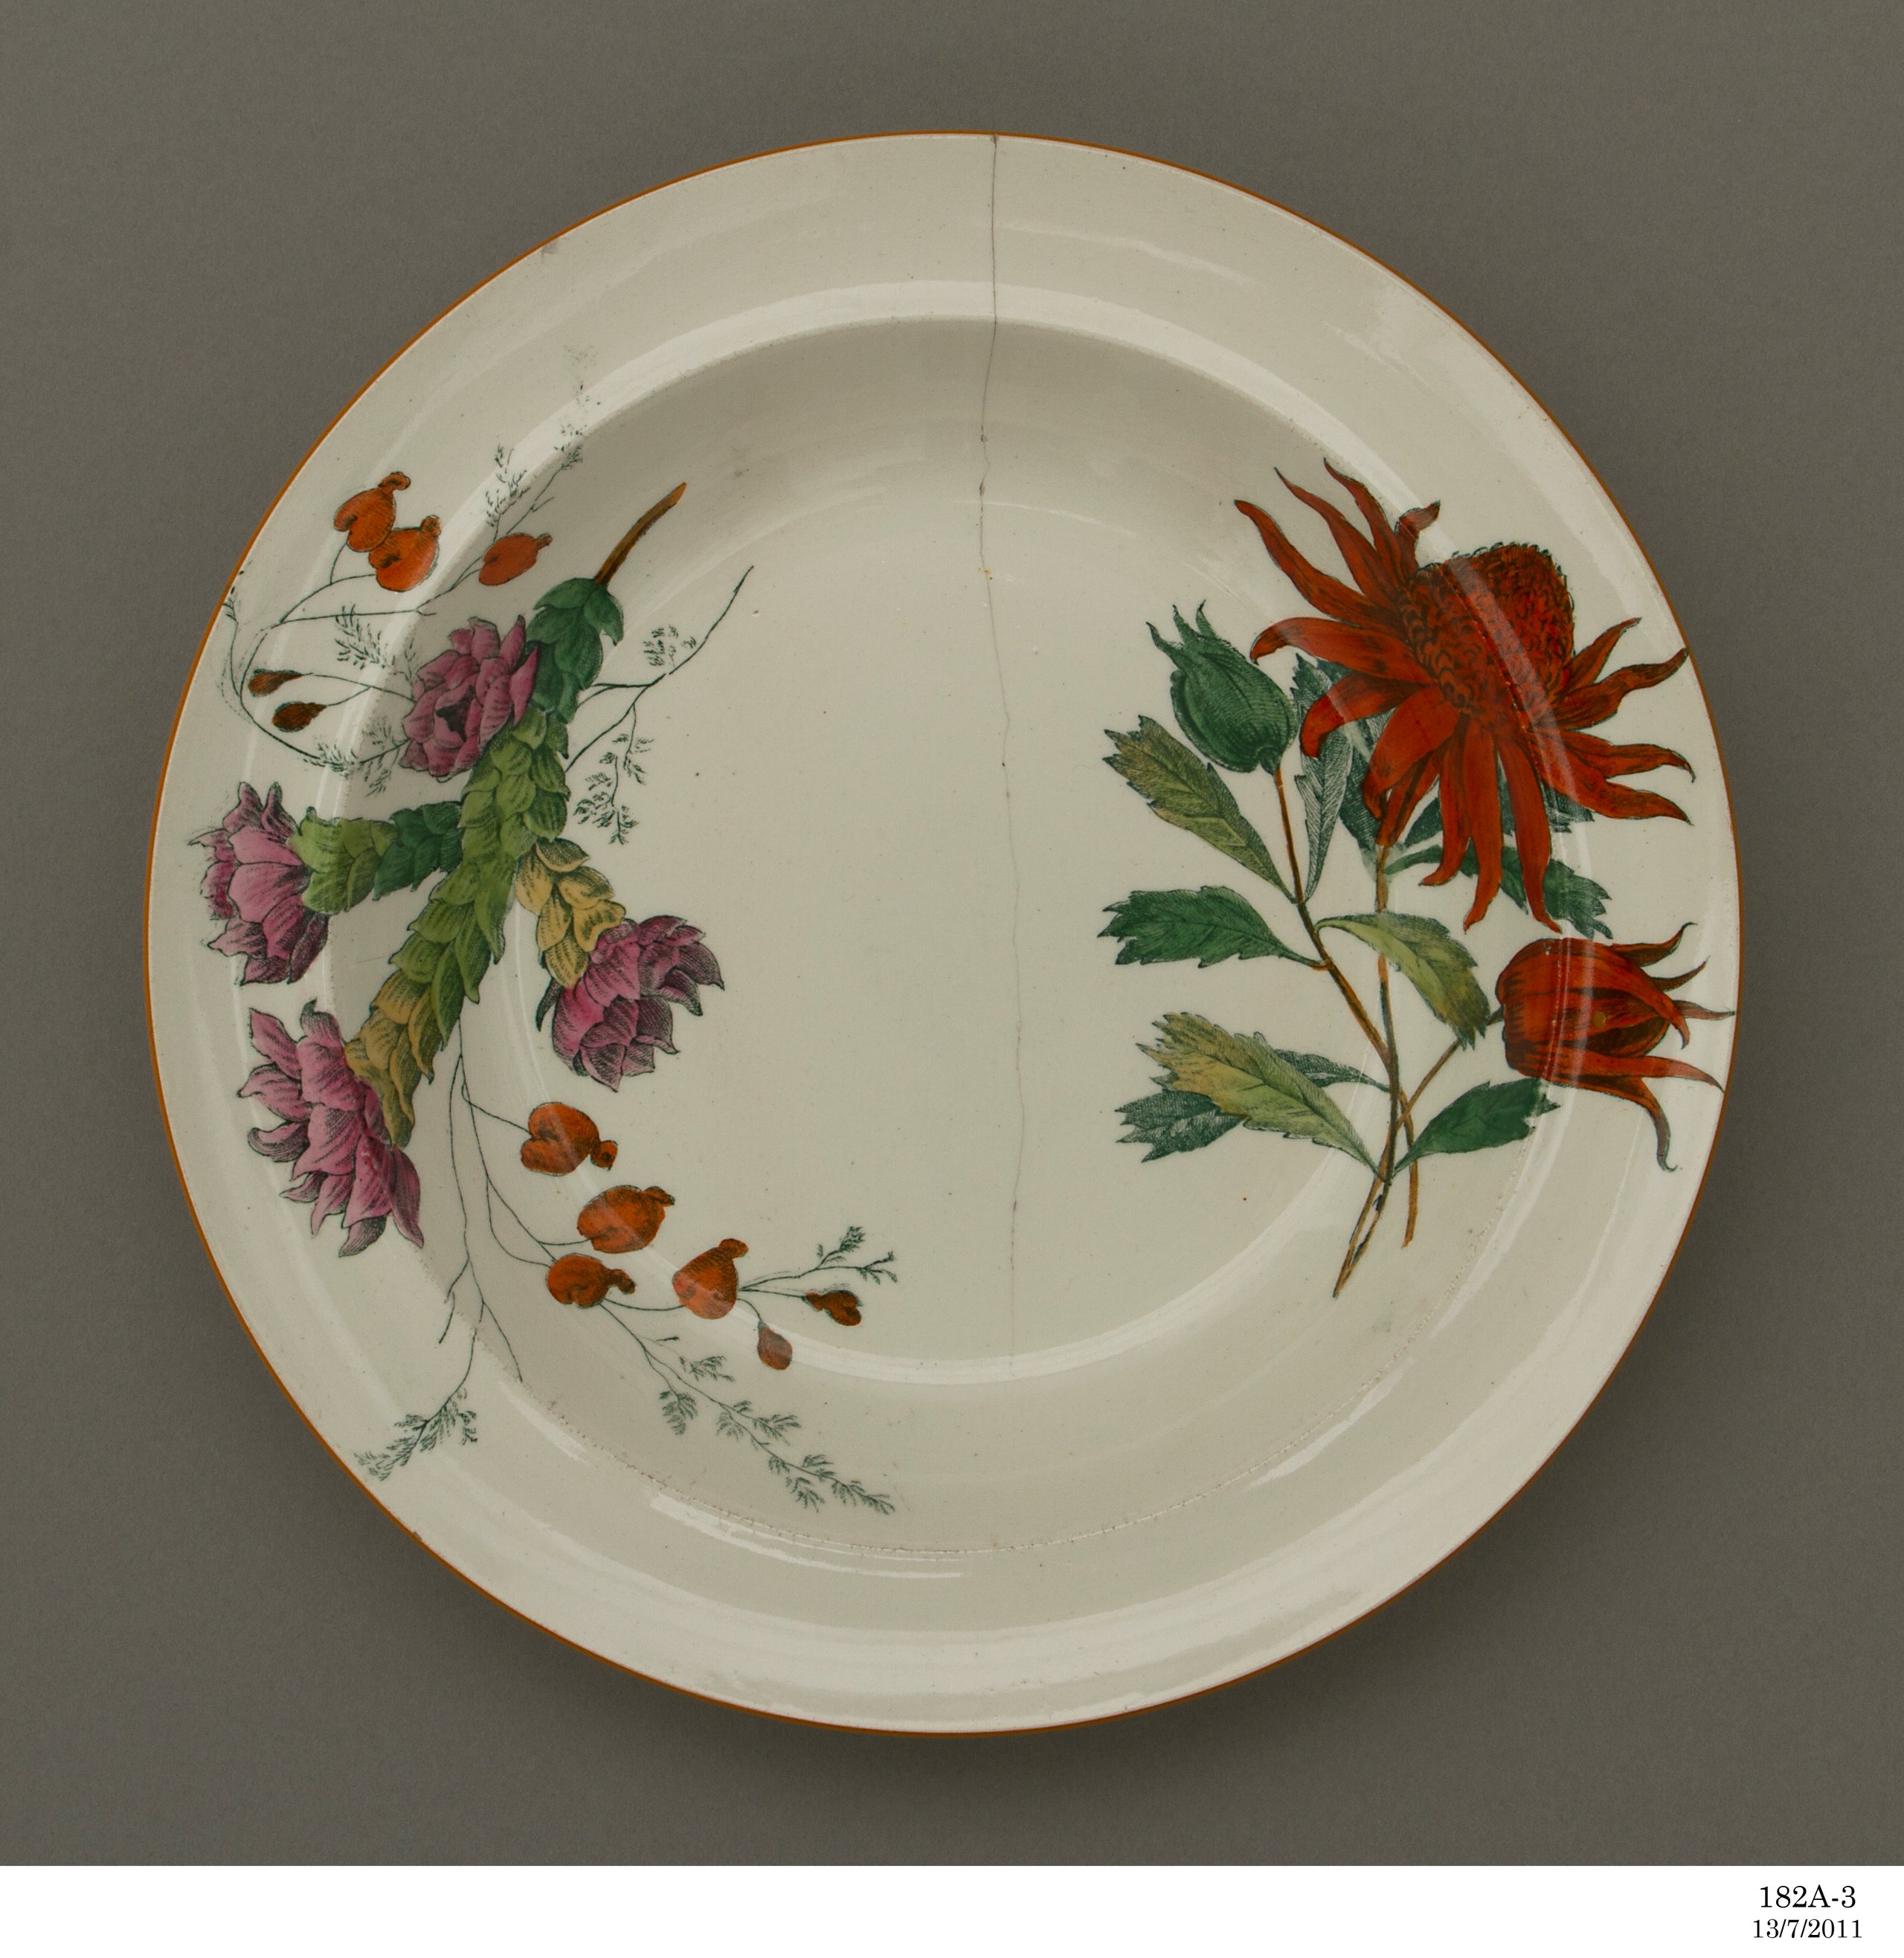 'Australian Flora' Soup Plate by Wedgwood